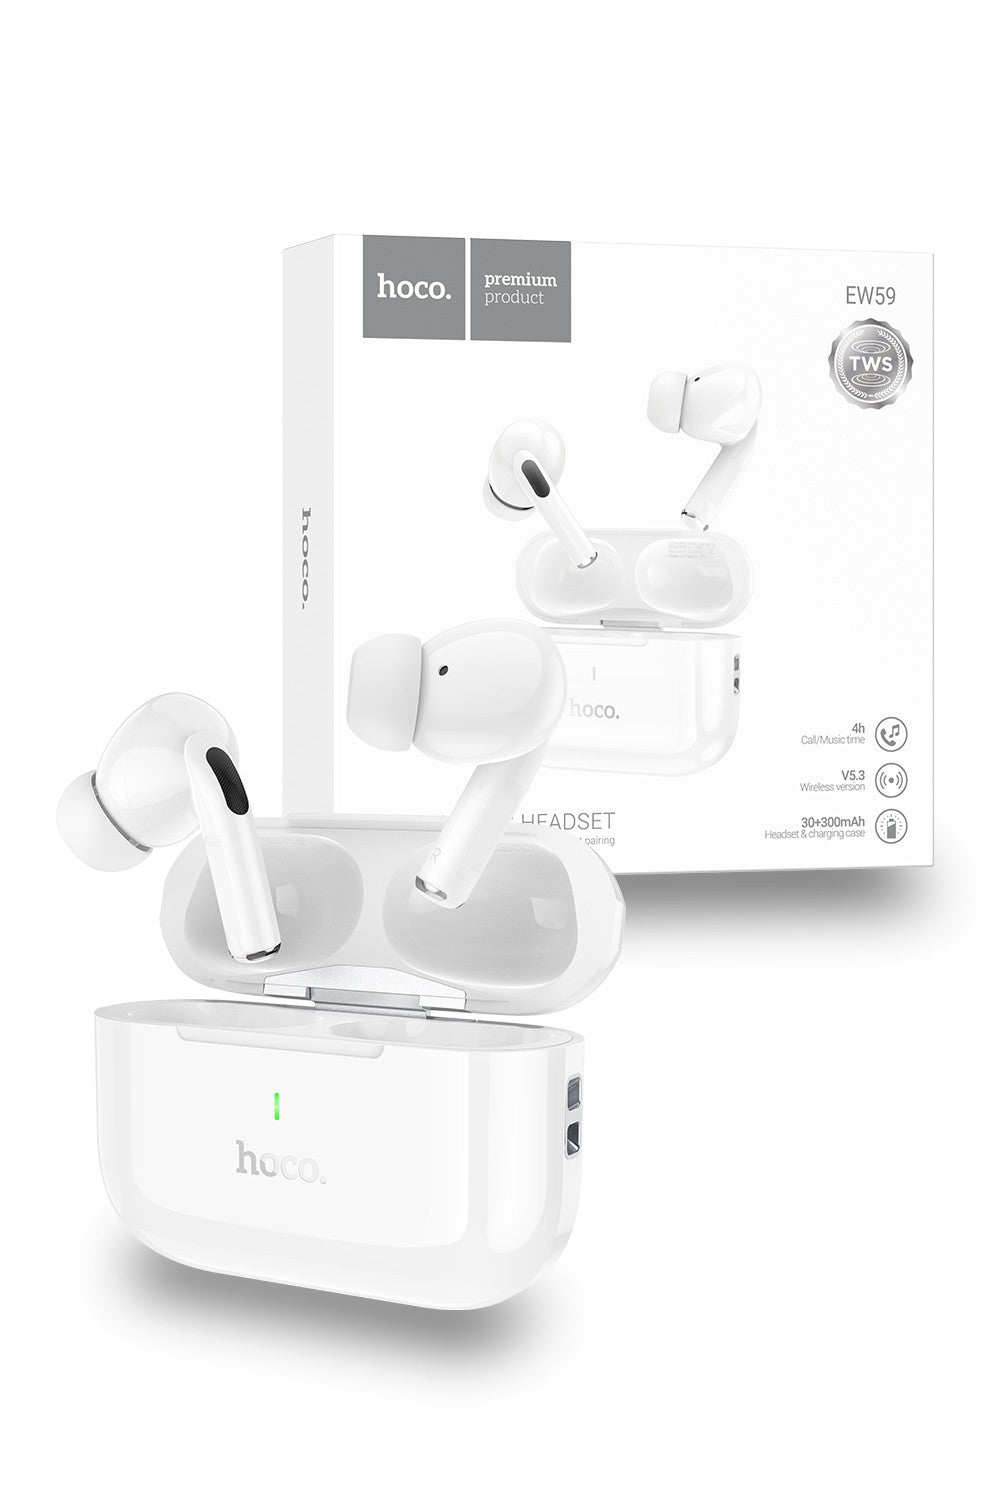 Hoco Bluetooth Wireless Earphones Earpods Stereo Sound 4 Hours Playtime EW59